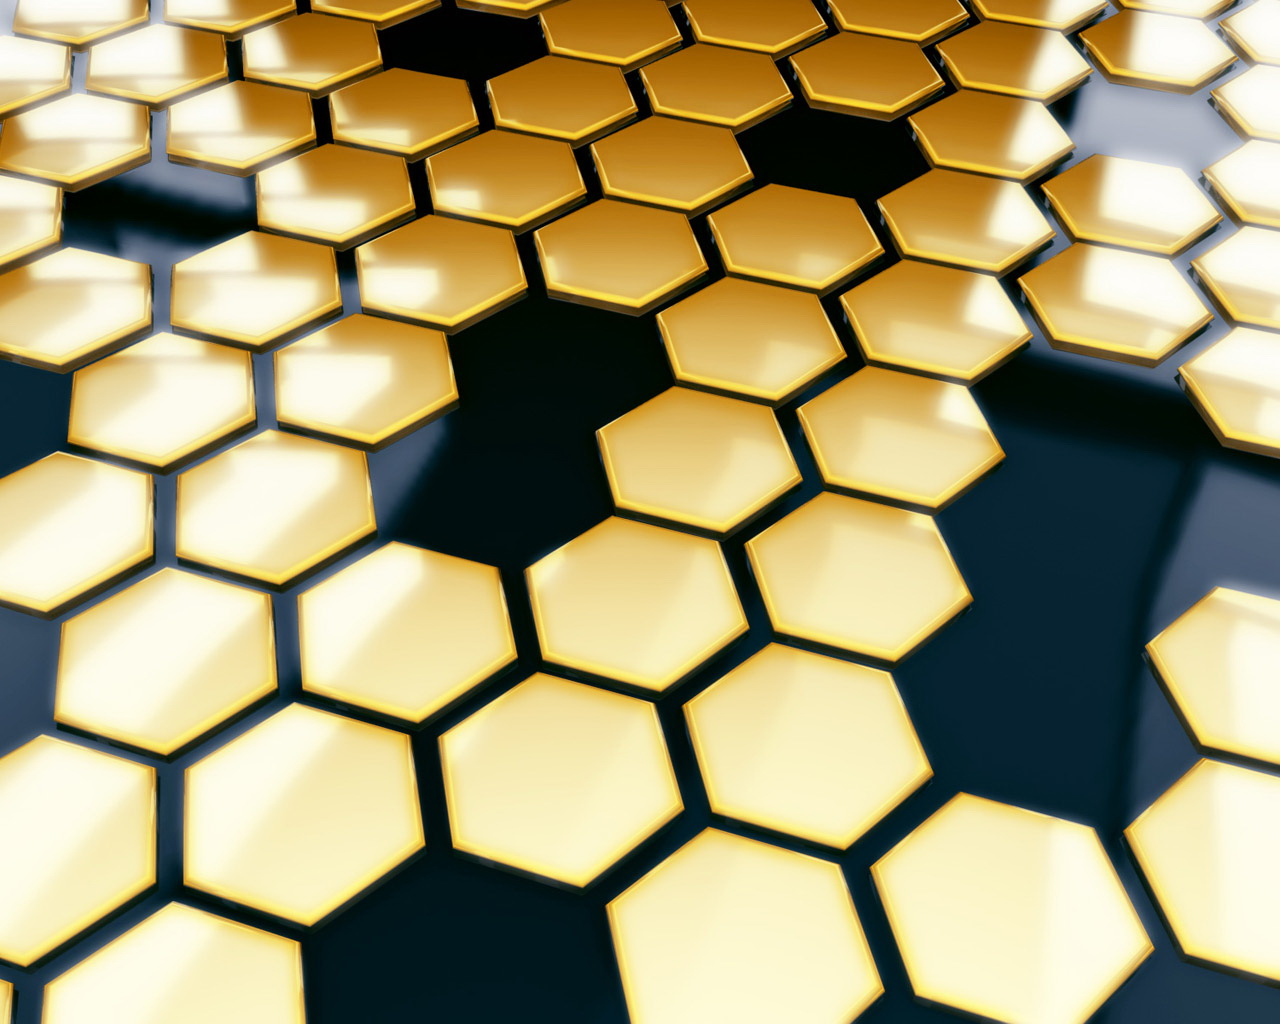 Image Honeycomb